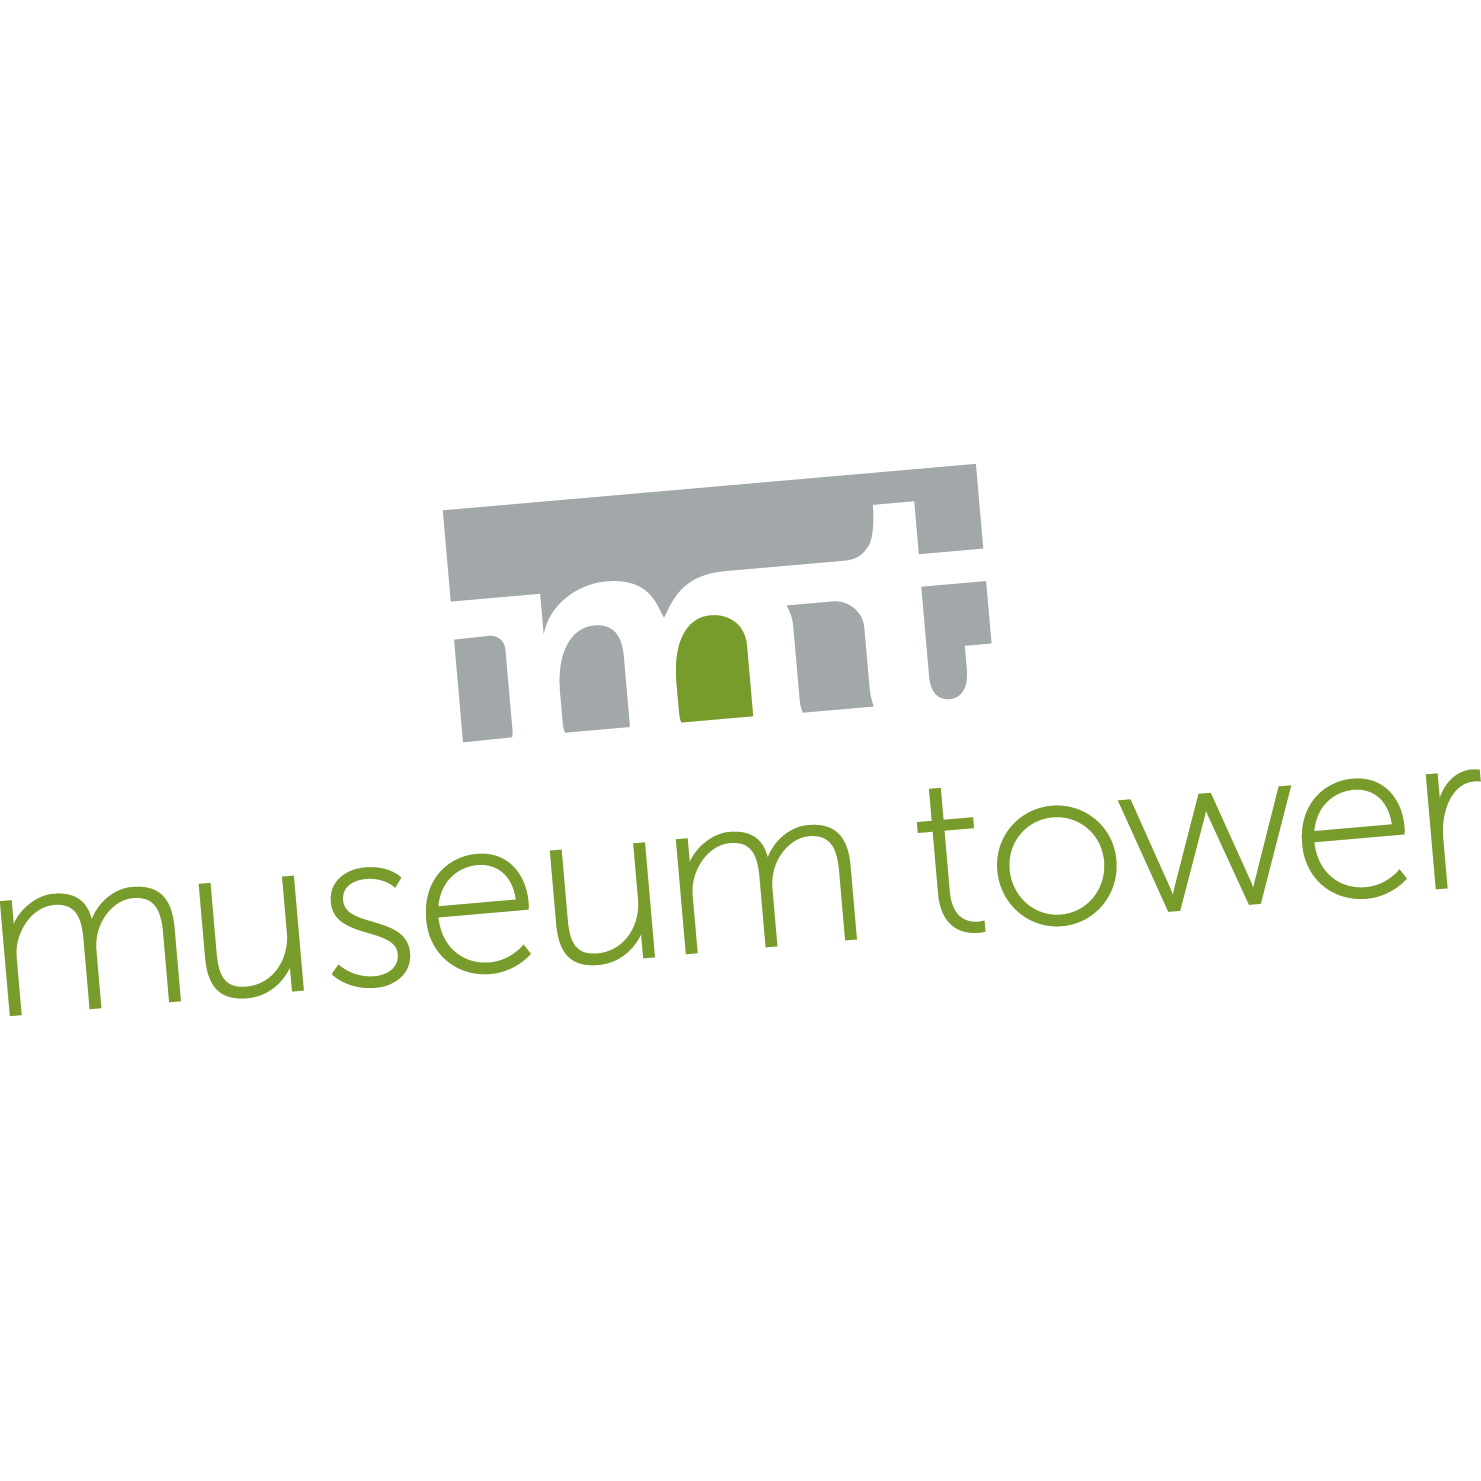 Museum Tower Photo